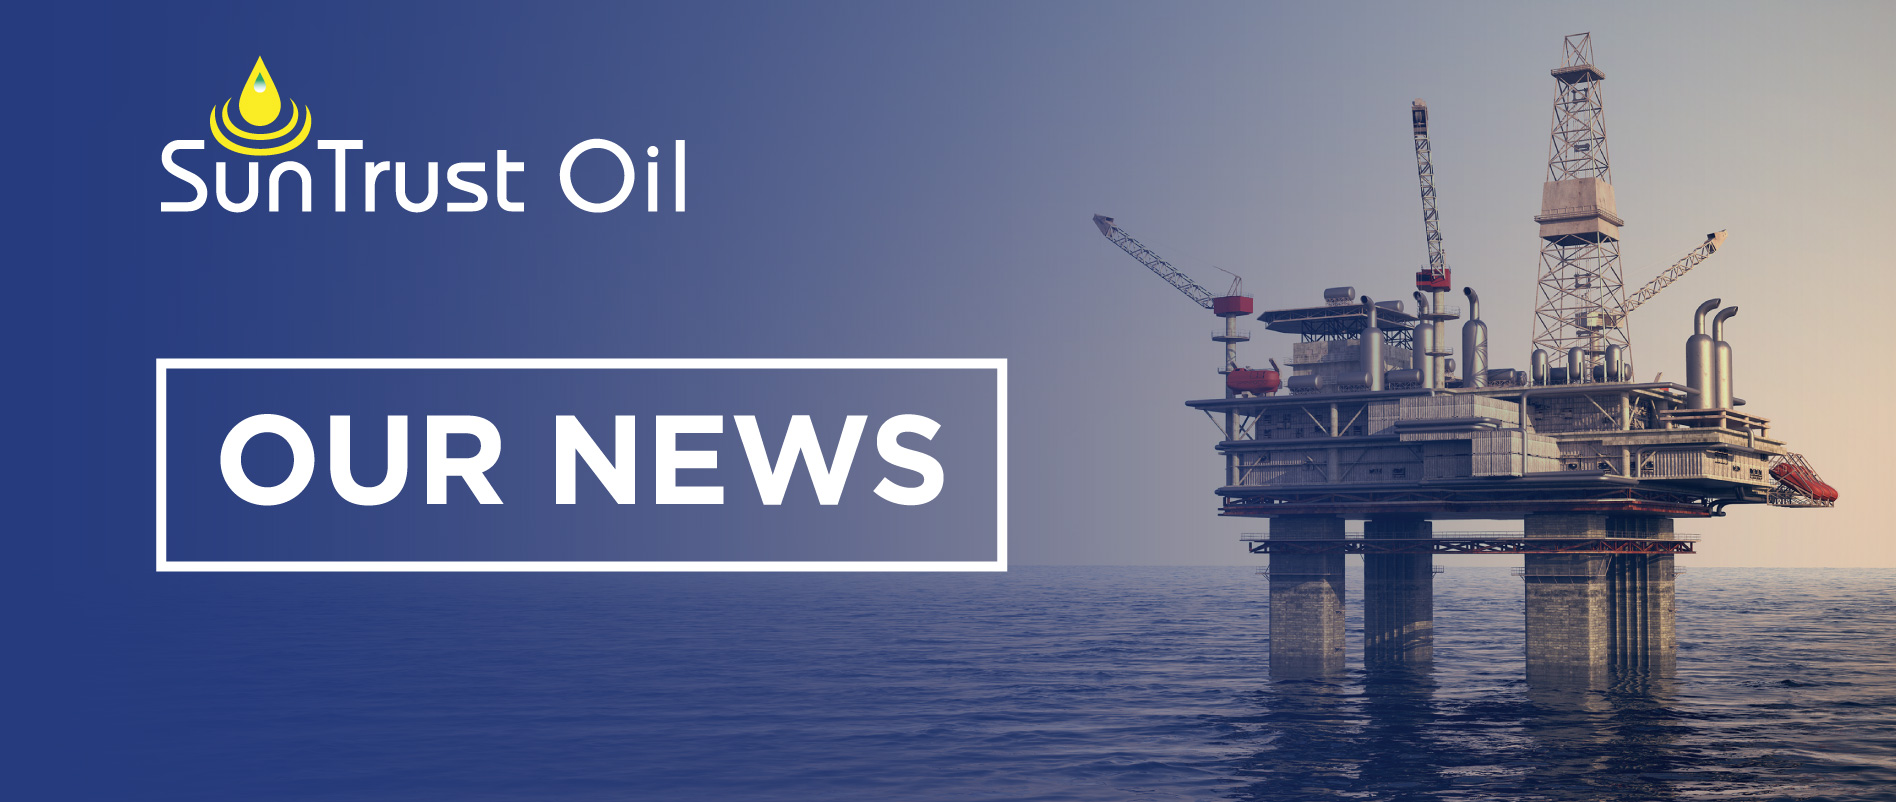 SUNTRUST OIL ANNOUNCES THE COMMENCEMENT OF THE UMU CE-1 DRILLING CAMPAIGN